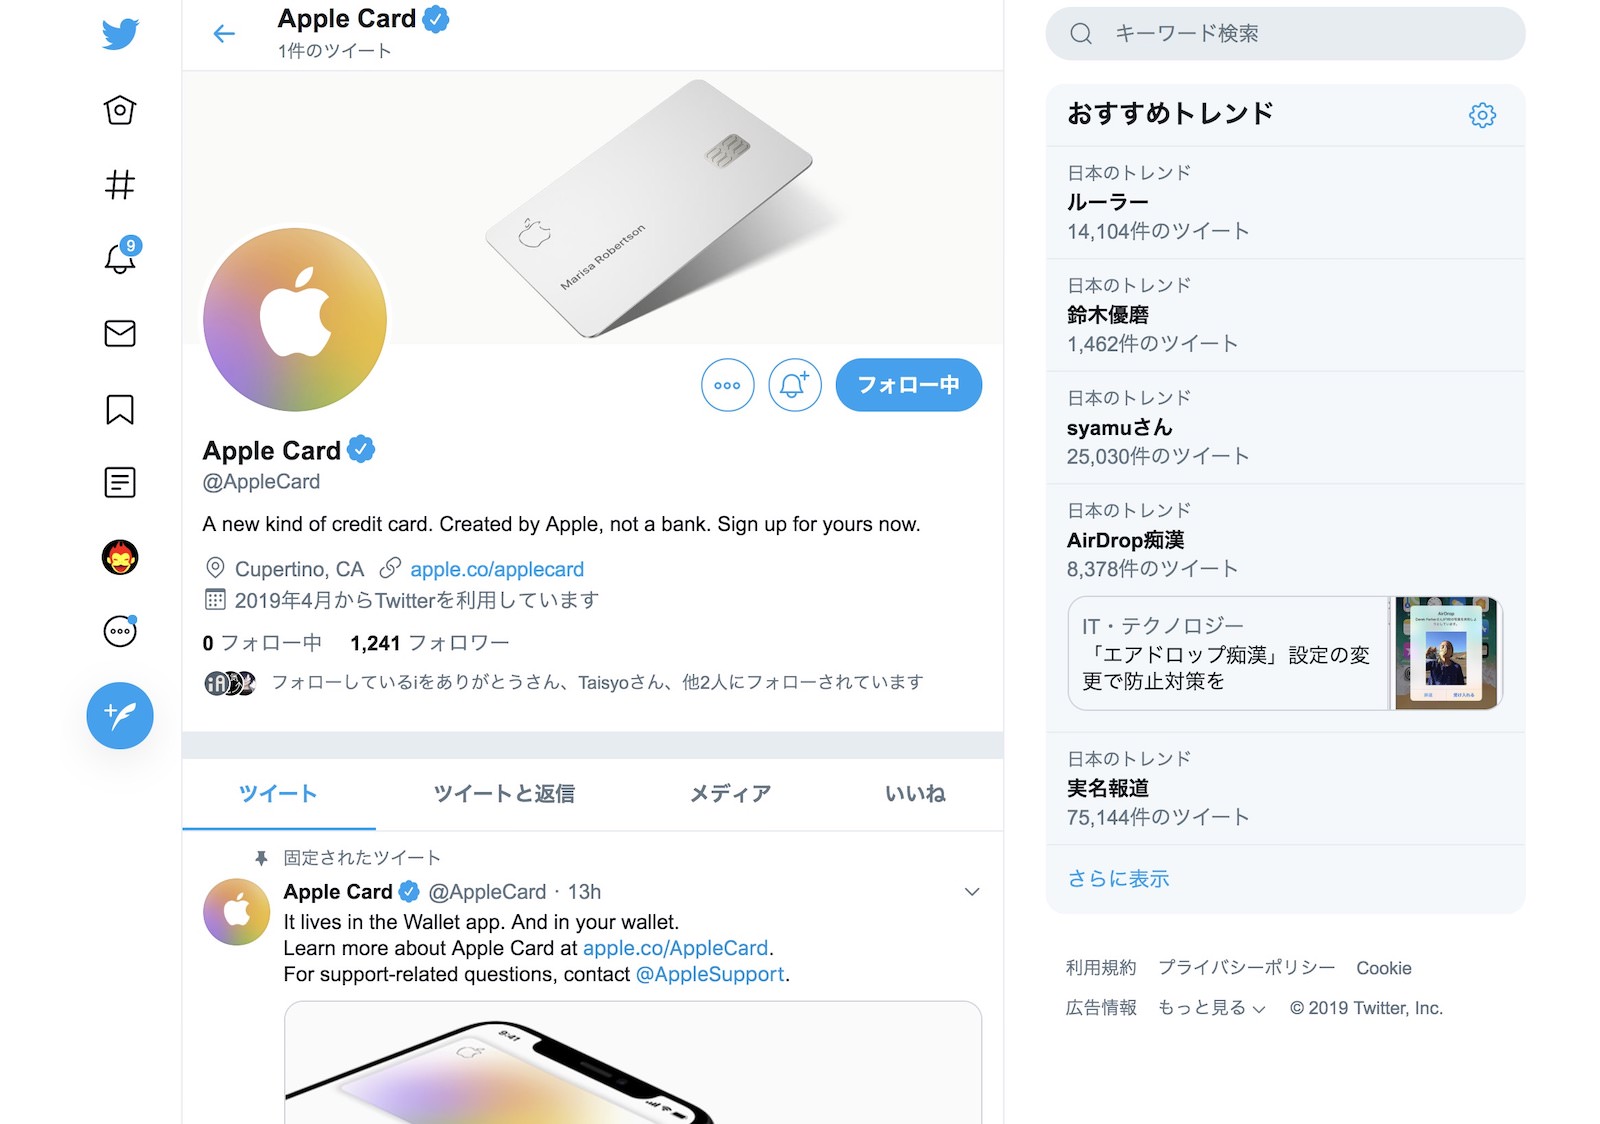 Apple-Card-Twitte-r-Account.jpg